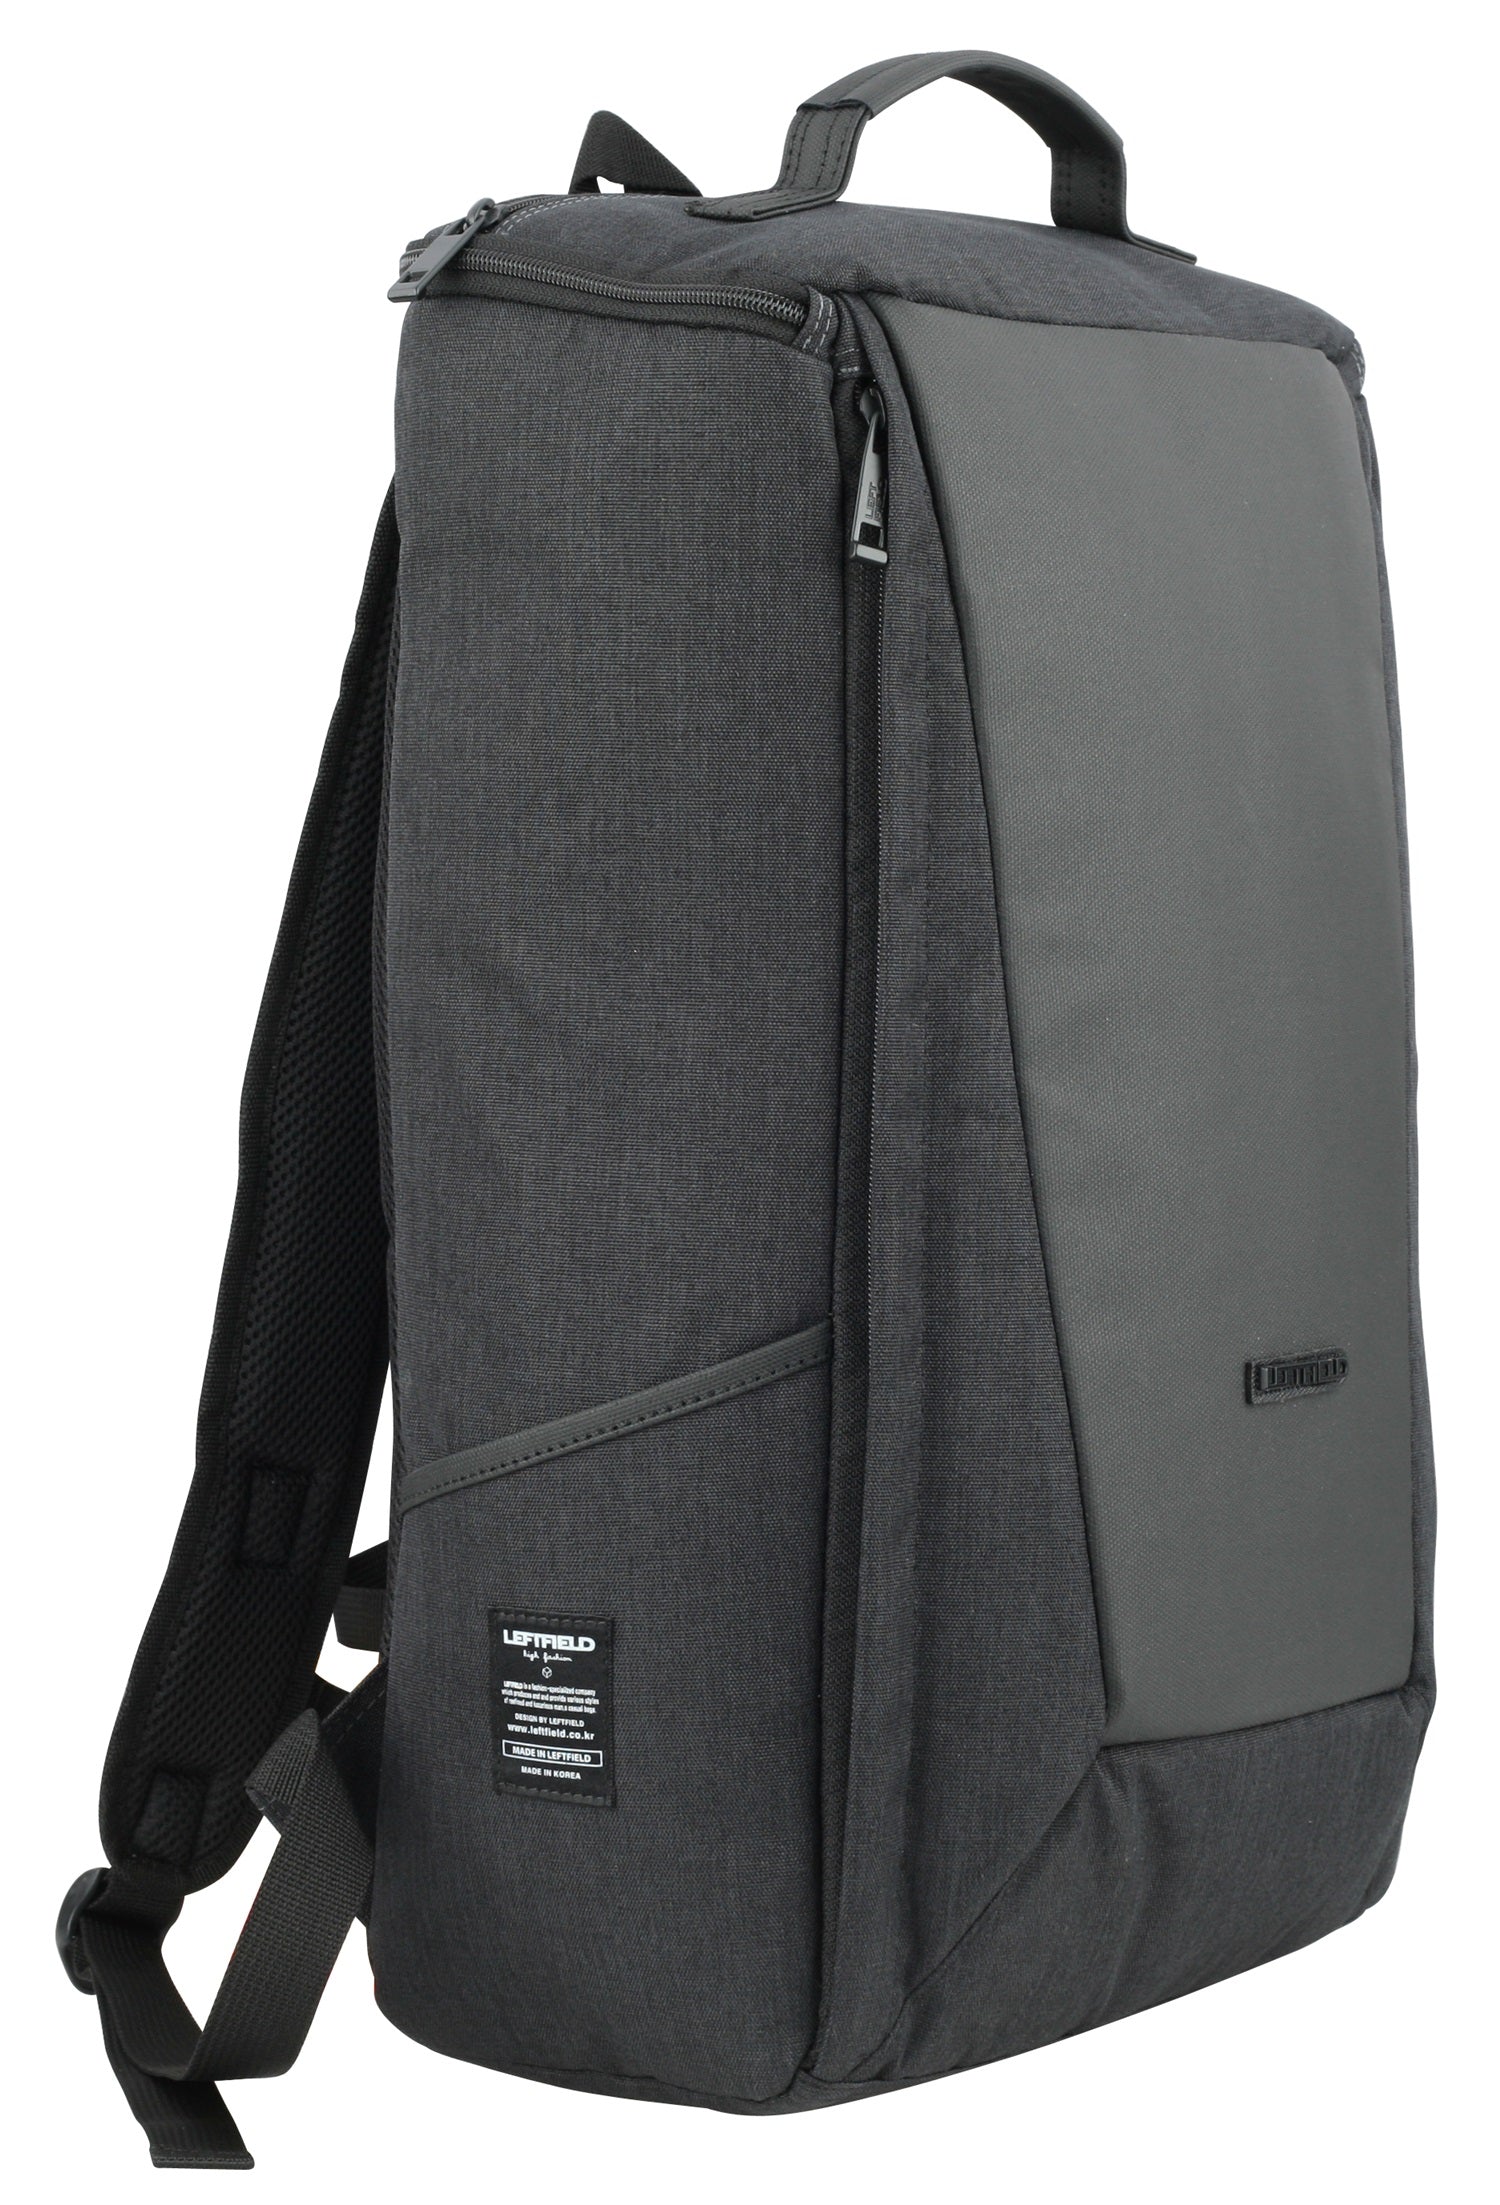 Black Canvas Casual Business Laptop School Backpacks Bookbags